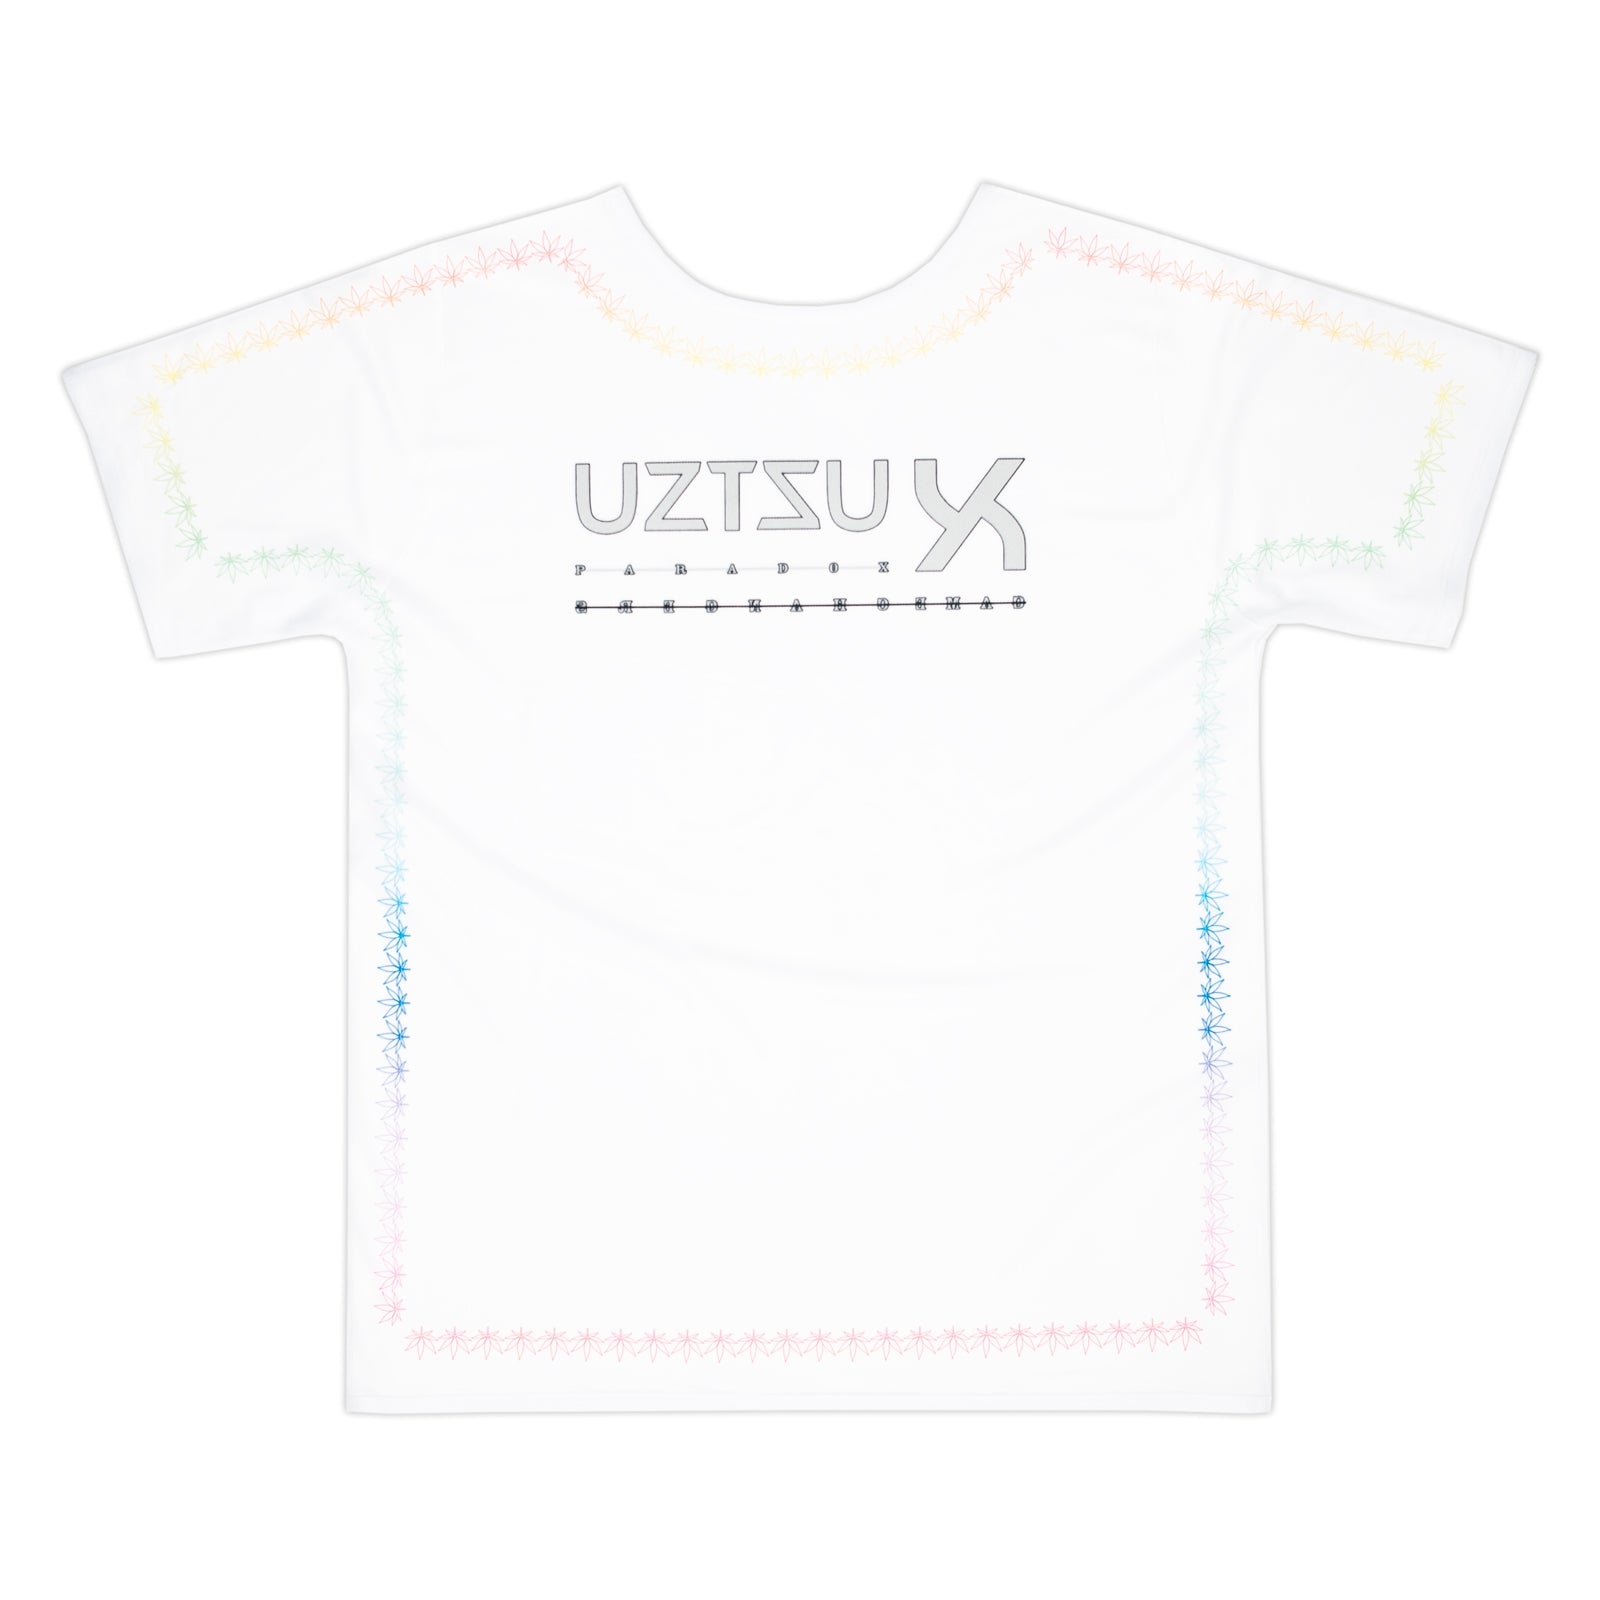 Weed to be Happy | Pop T-Shirt 4 in 1 | Uztzu - Uztzu Clothing - Shop Super 4 in 1 T-shirts, Pants and hoodies online!